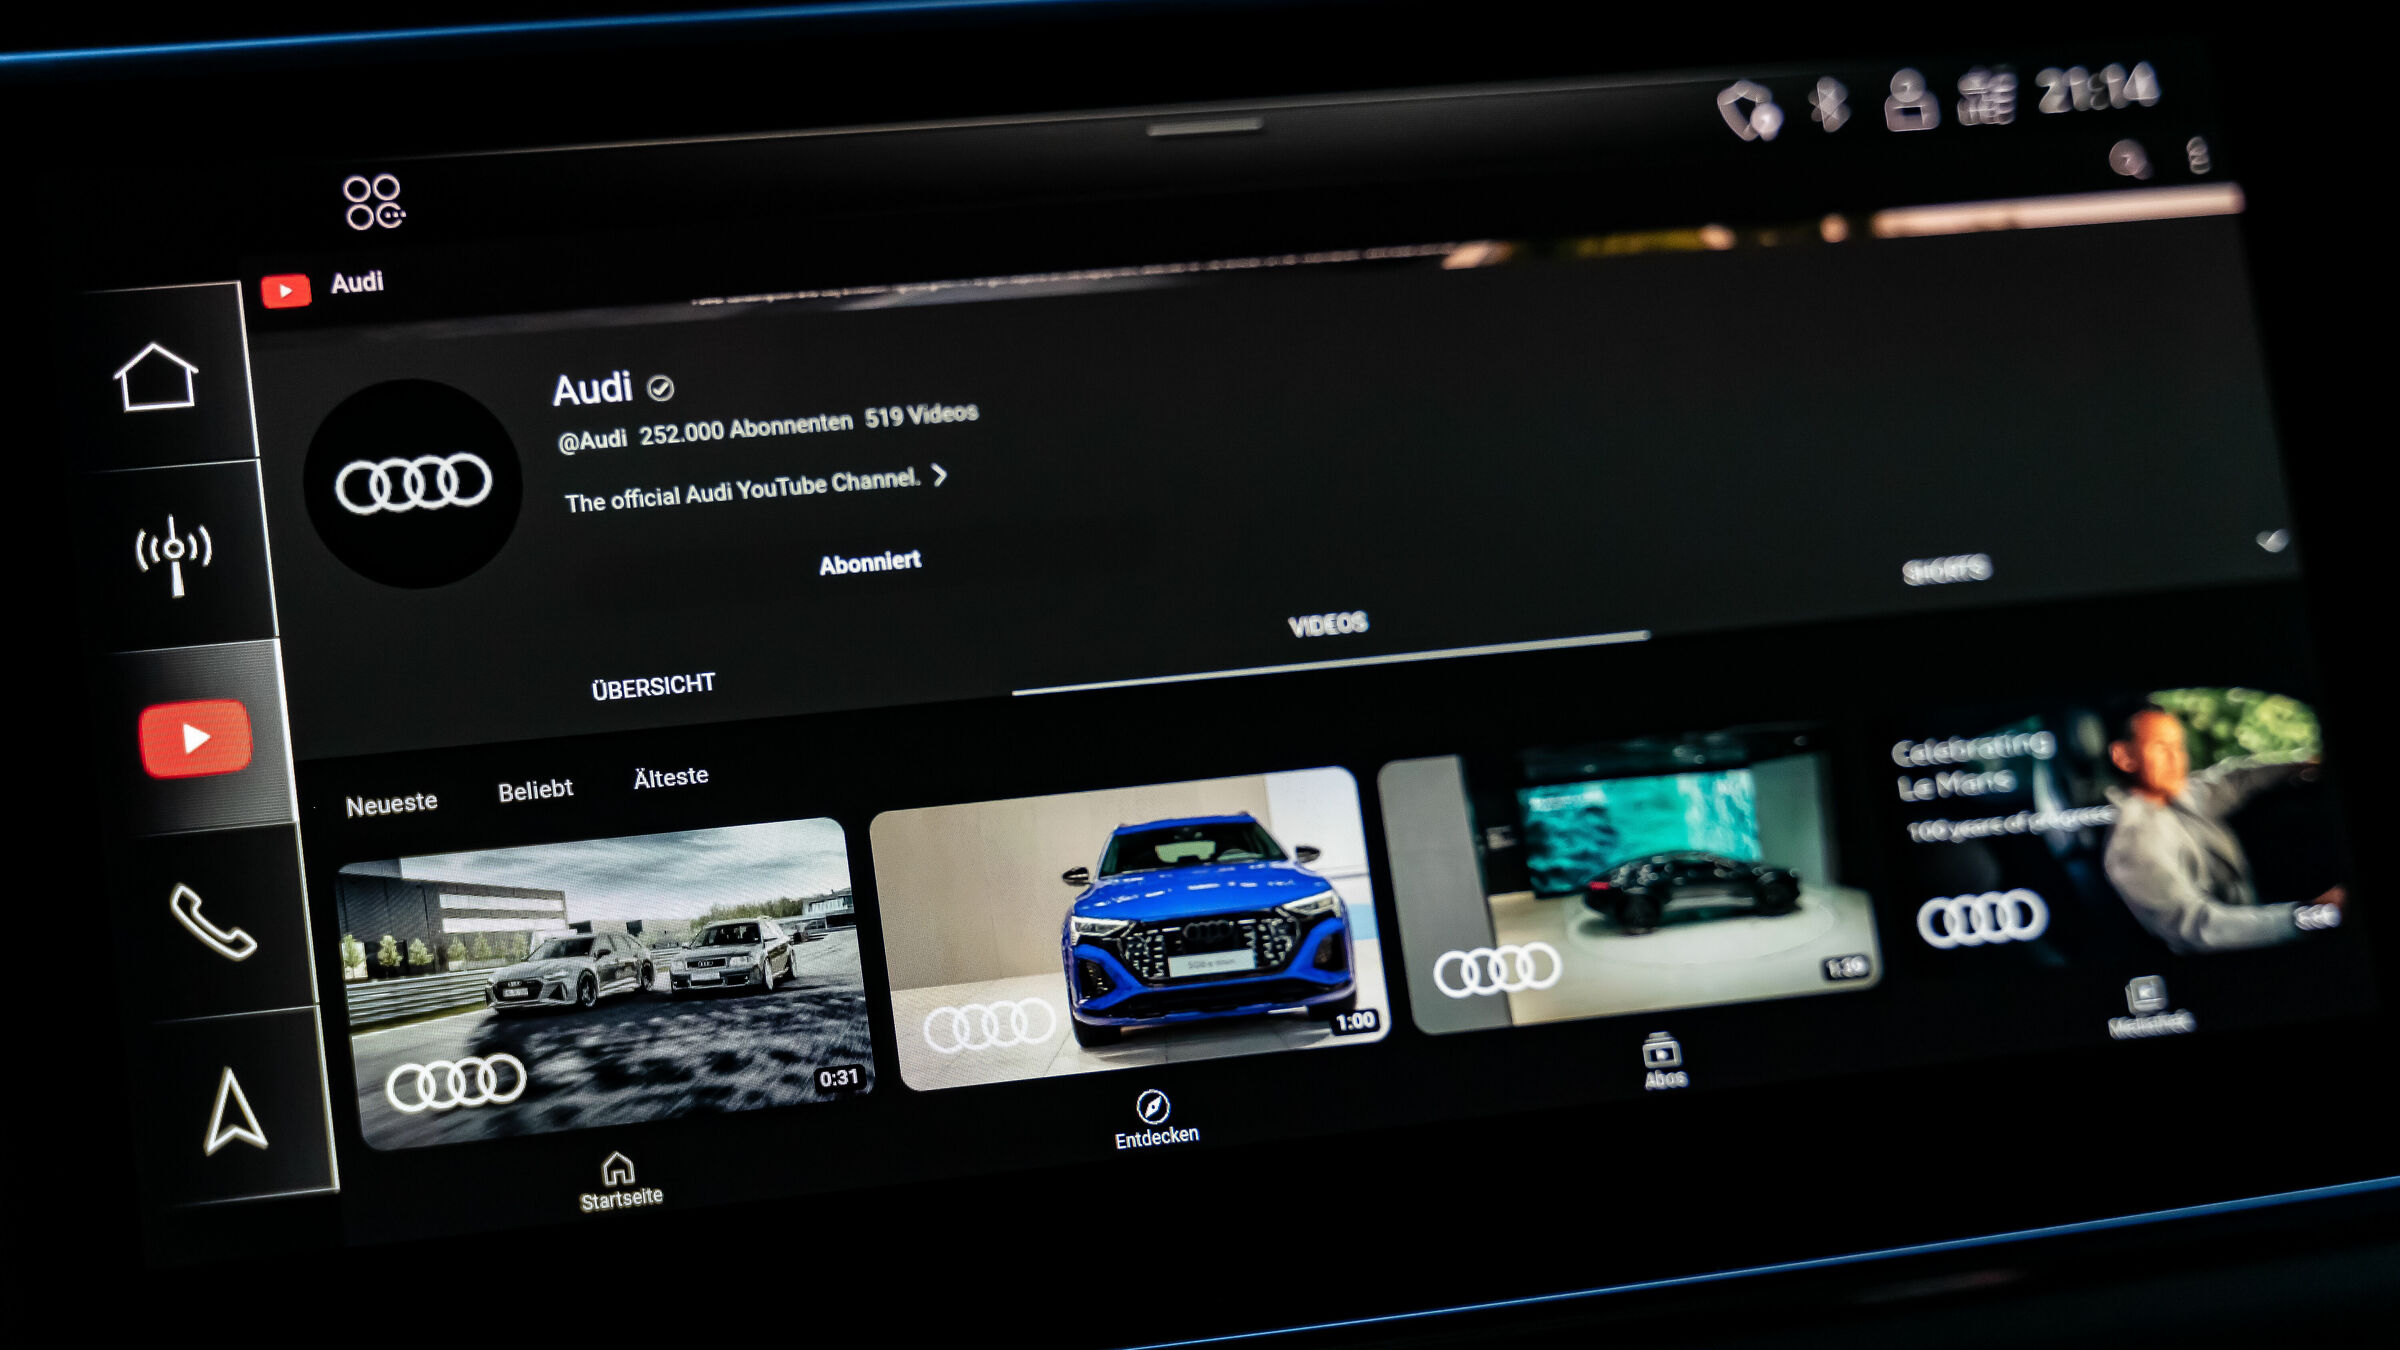 Audi-YouTube integration - PR image